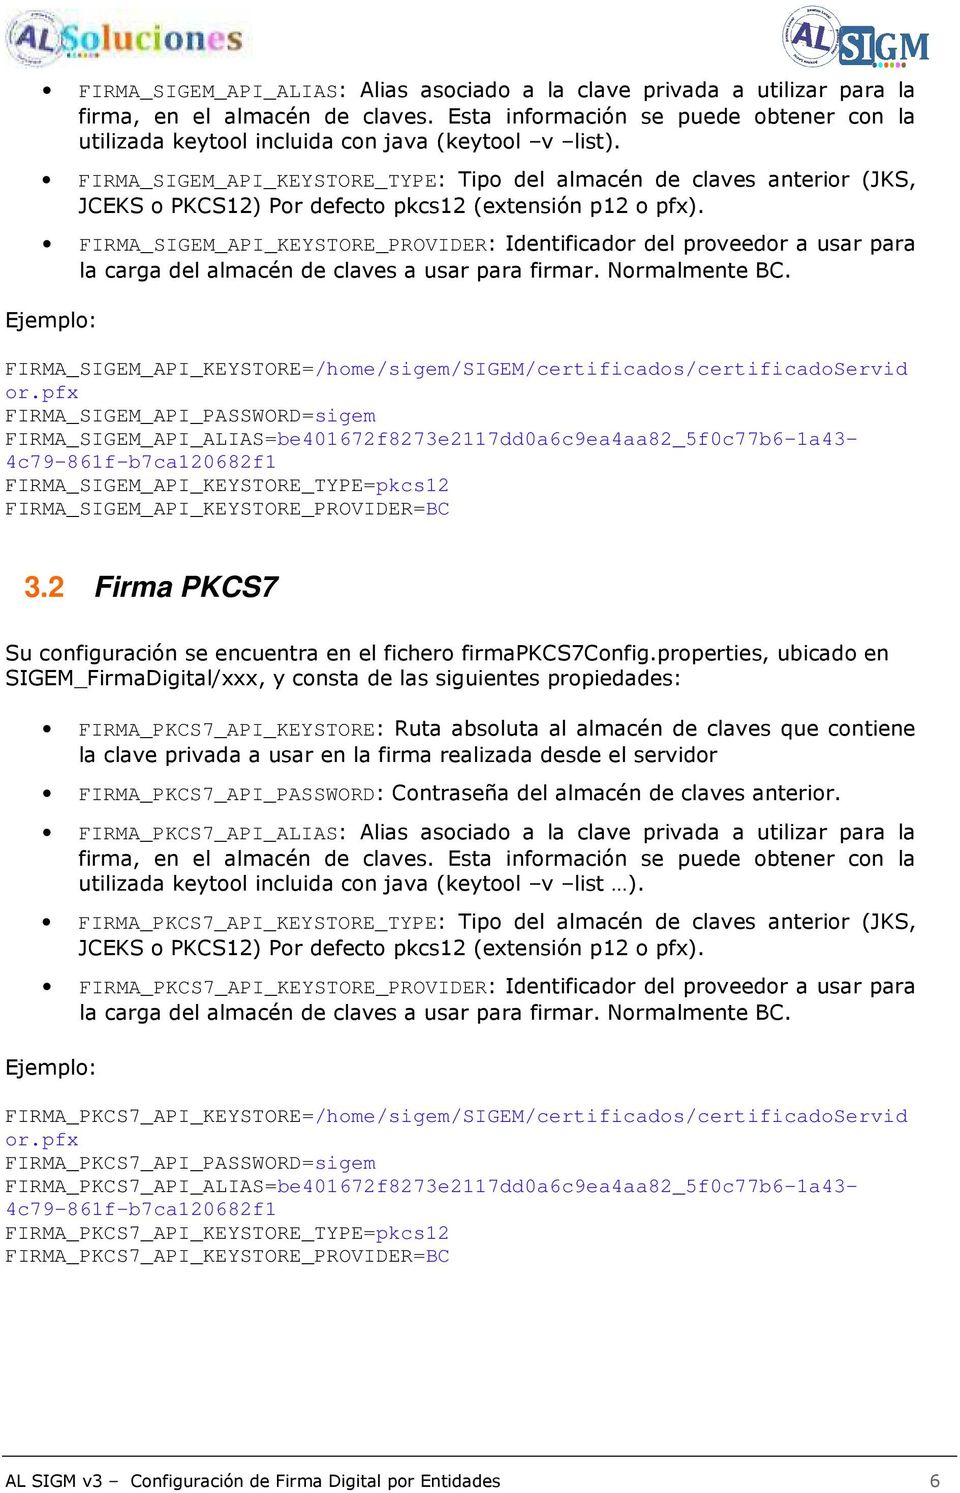 FIRMA_SIGEM_API_KEYSTORE_TYPE: Tipo del almacén de claves anterior (JKS, JCEKS o PKCS12) Por defecto pkcs12 (extensión p12 o pfx).